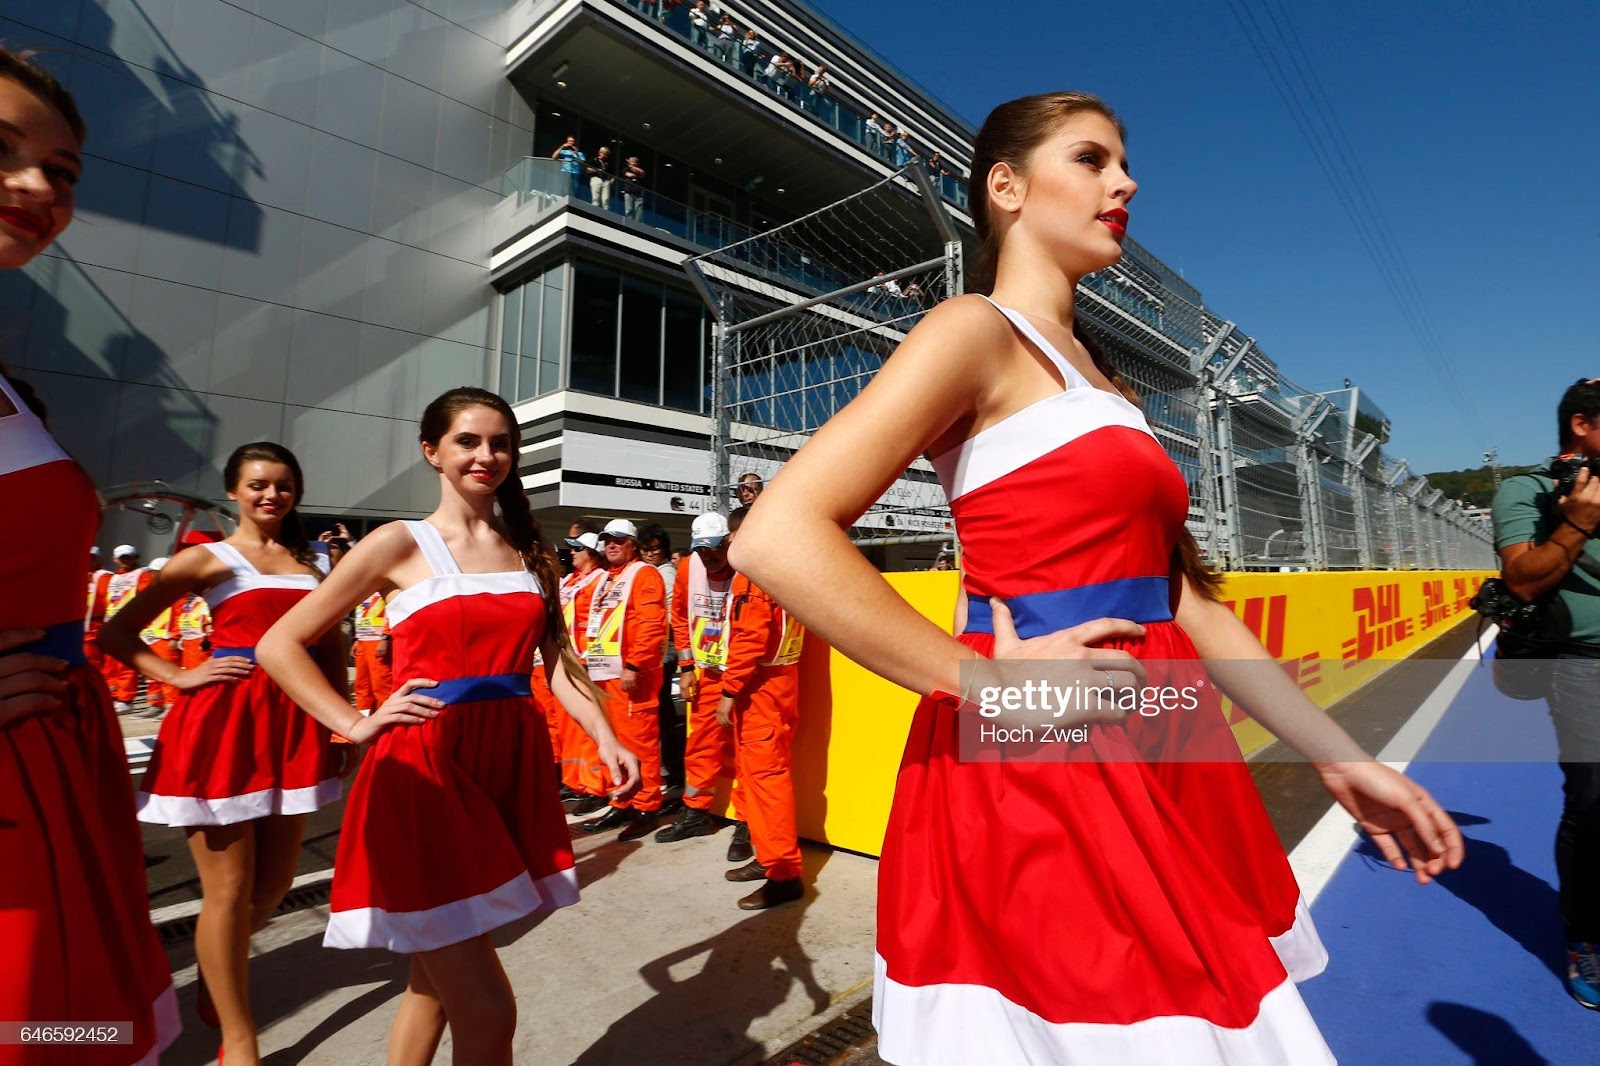 F1 World Championship 2014, Grand Prix of Russia, grid girls.